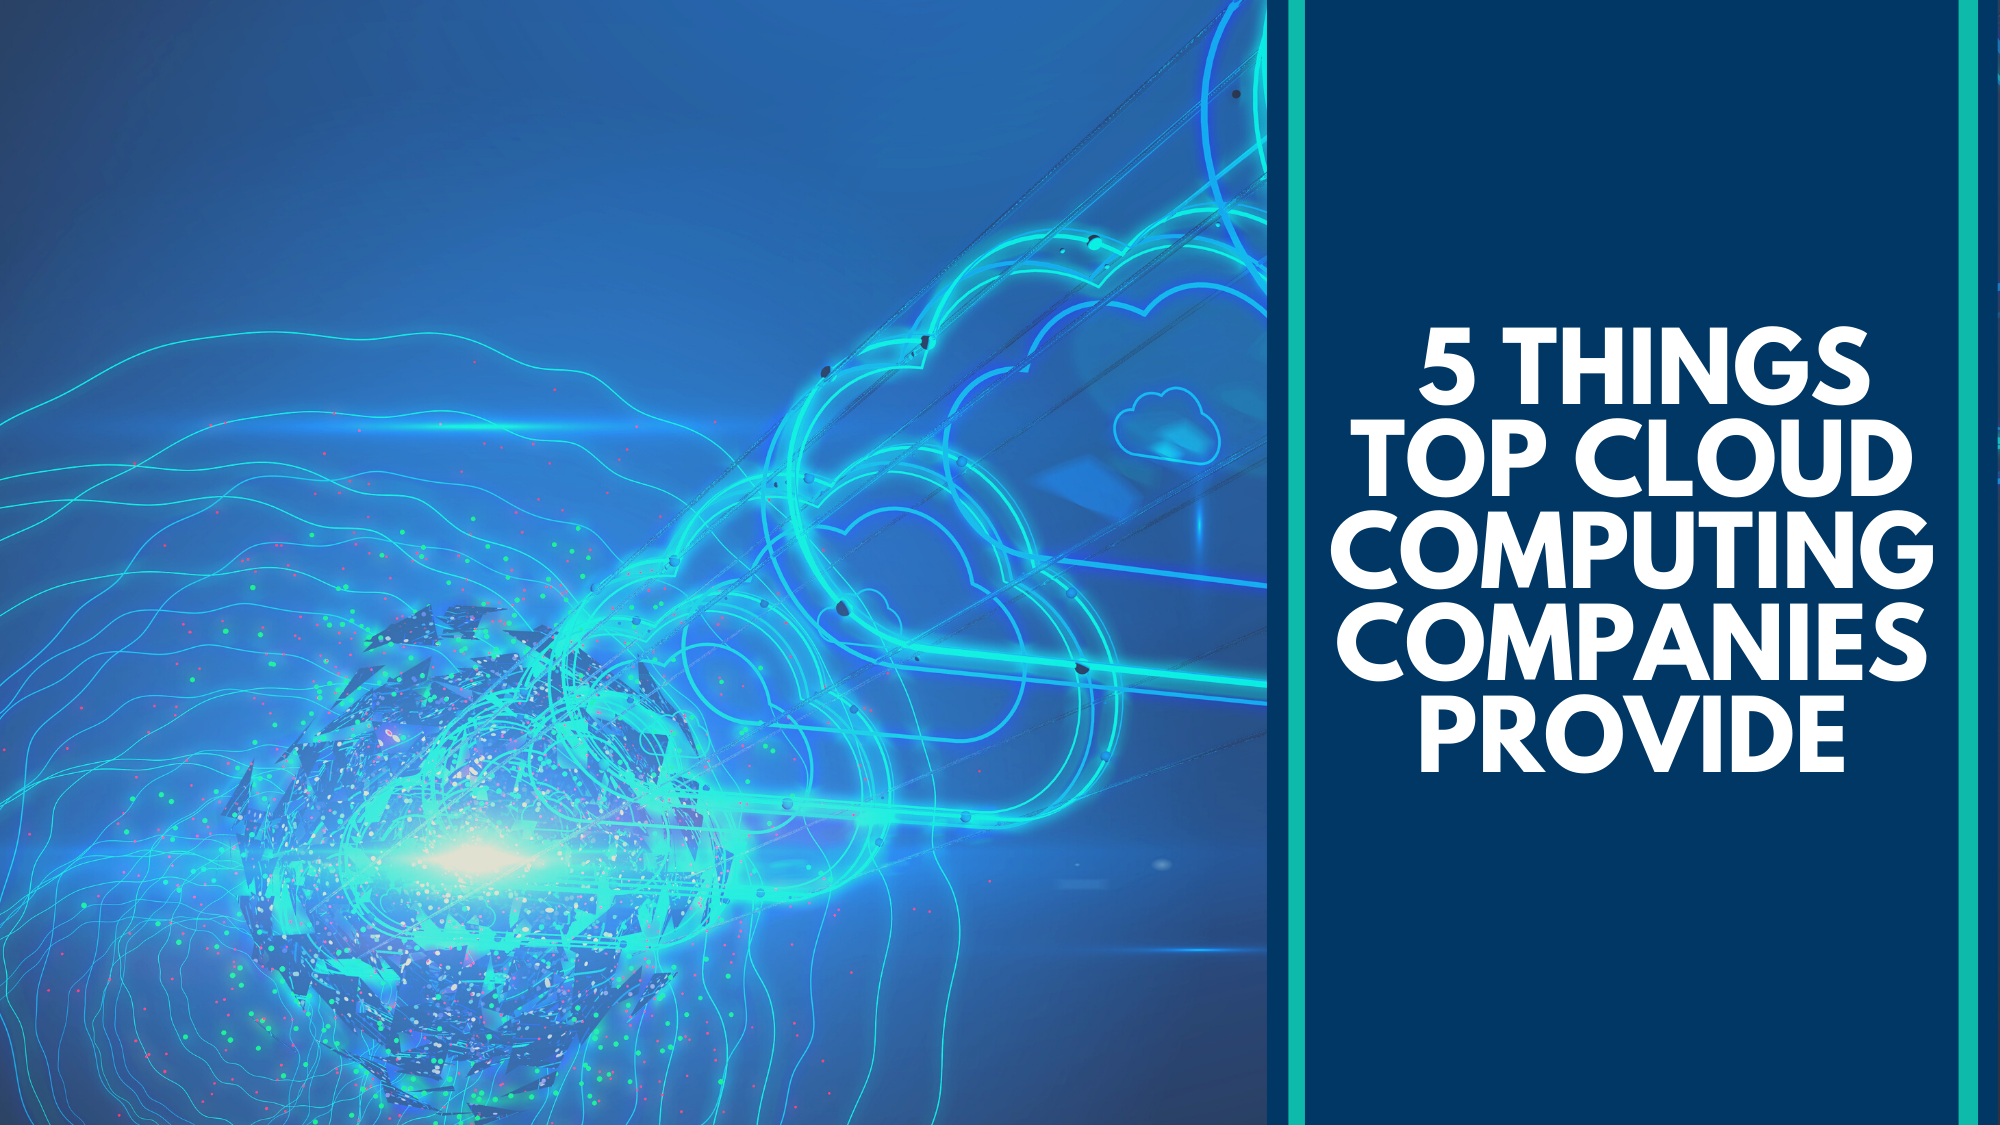 5 Things Top Cloud Computing Companies Provide